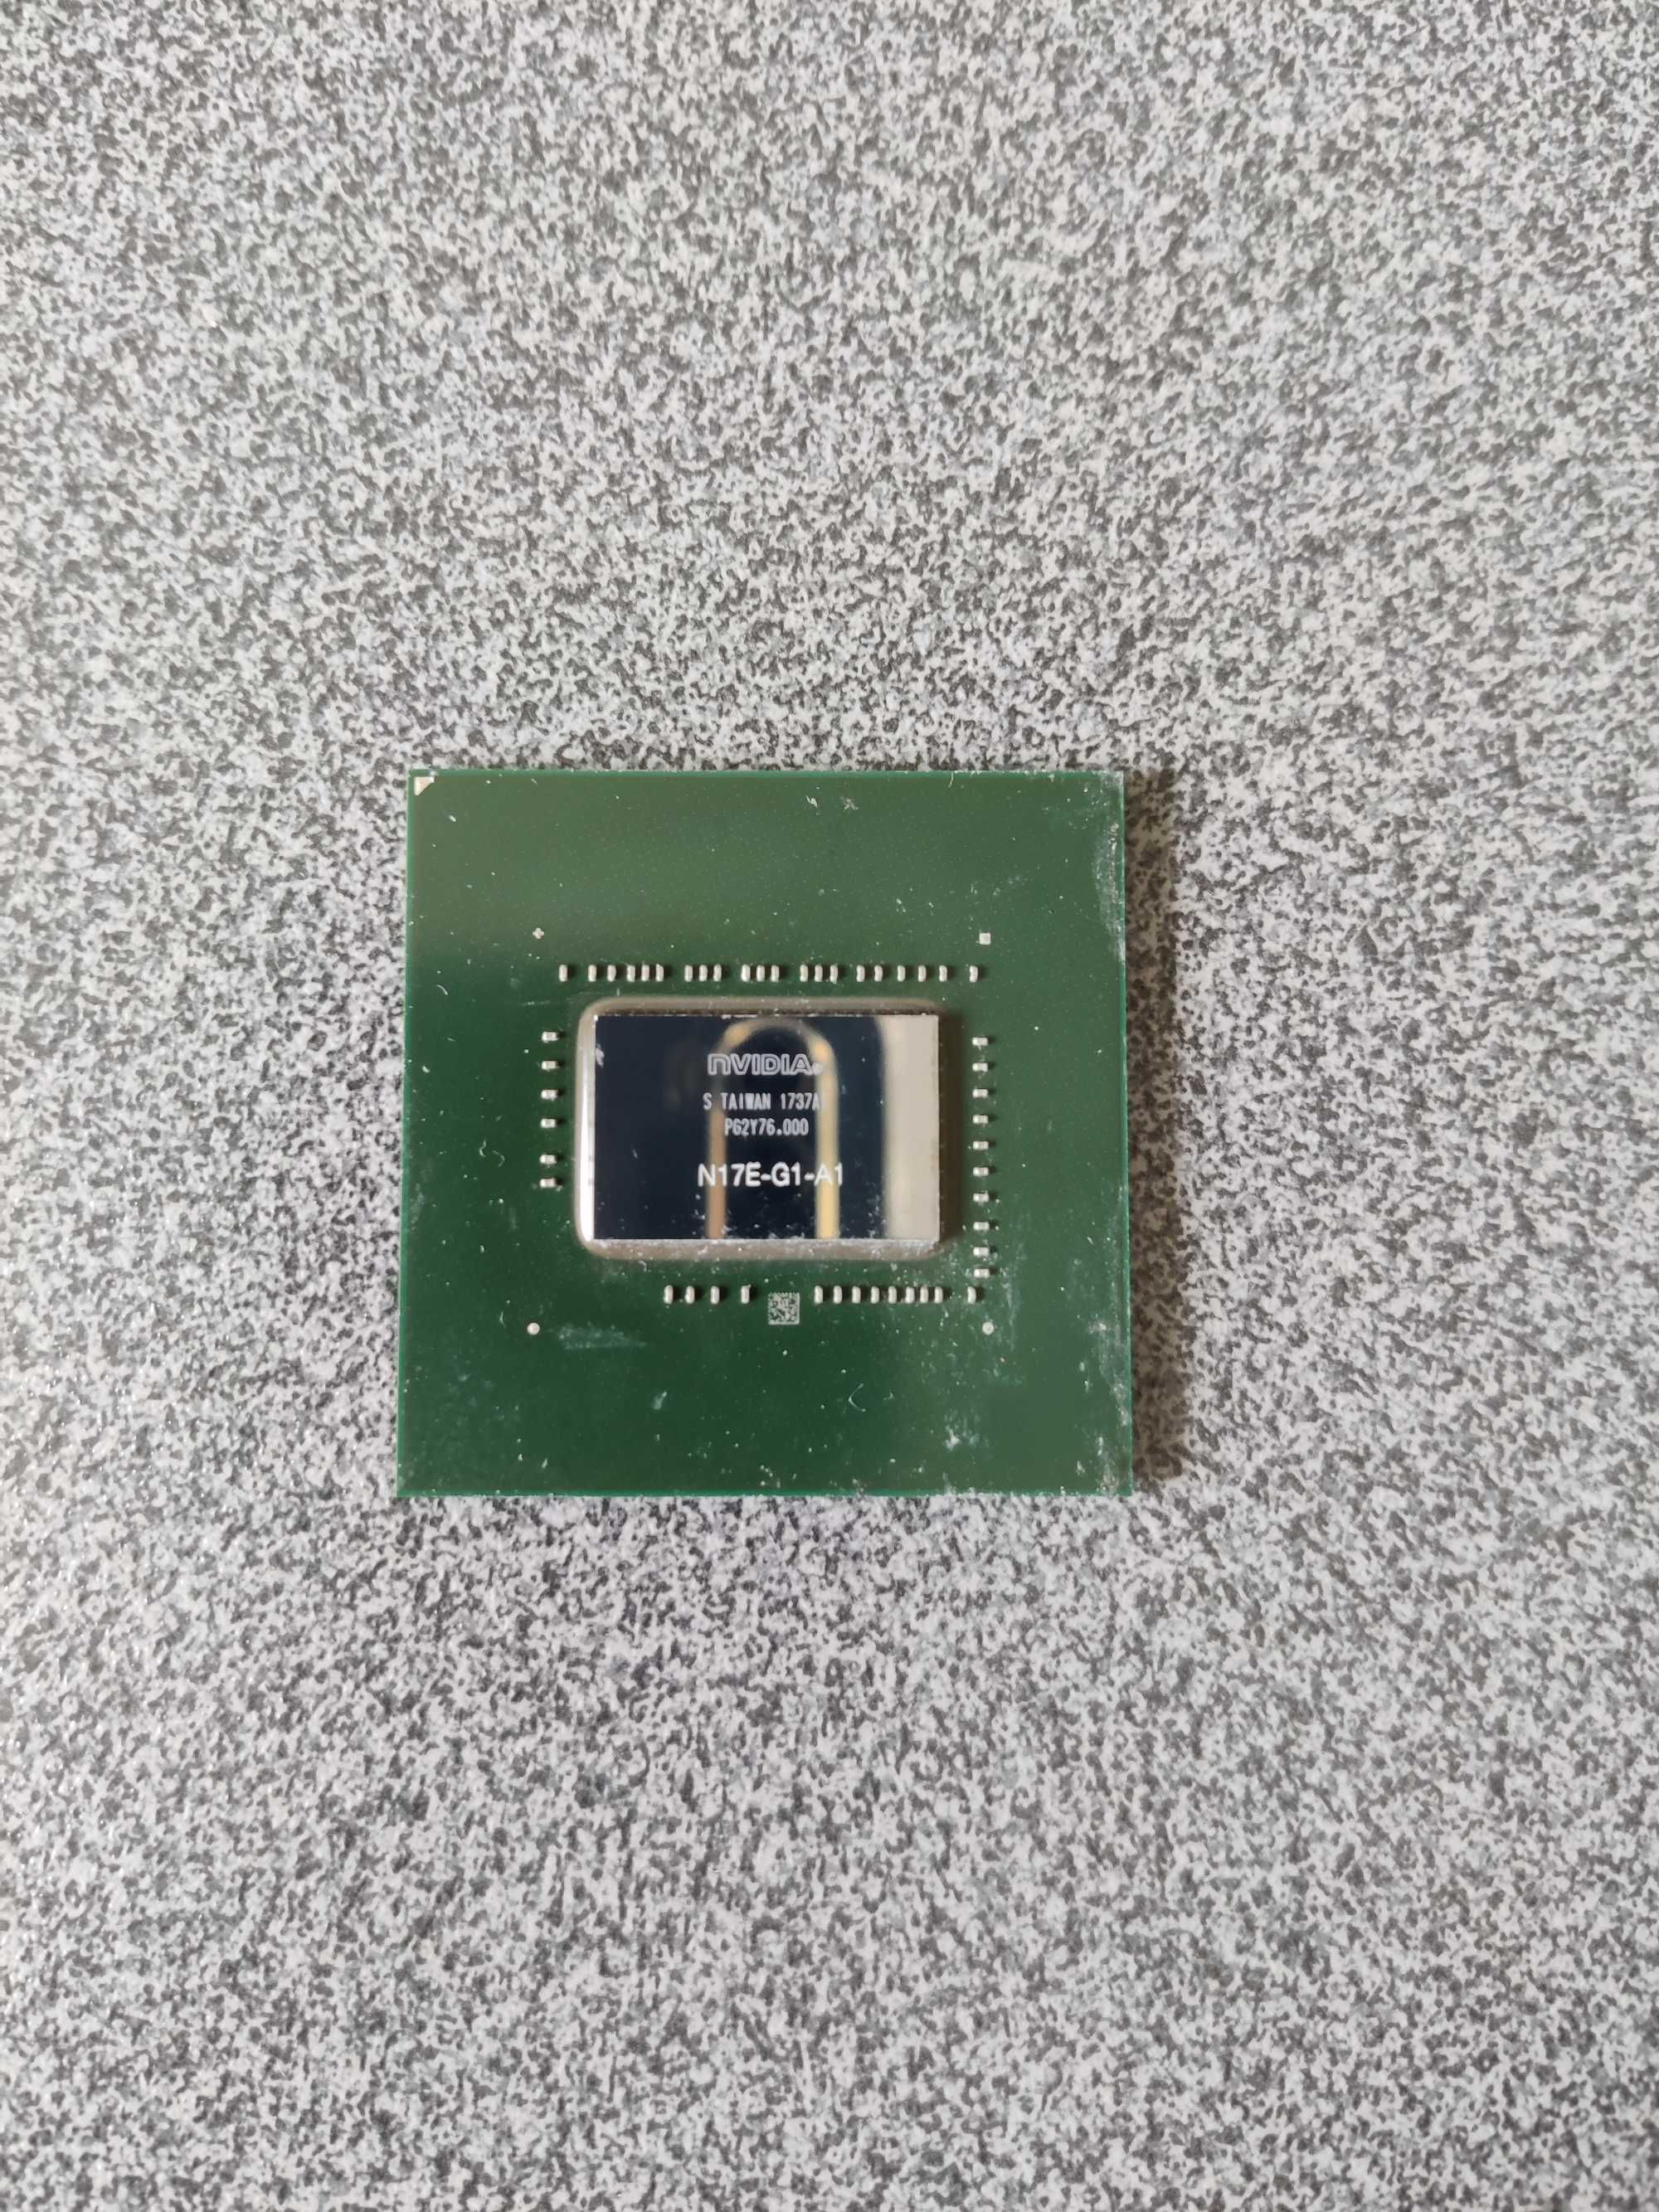 Видео чип gtx 1060 n17e-g1-a1